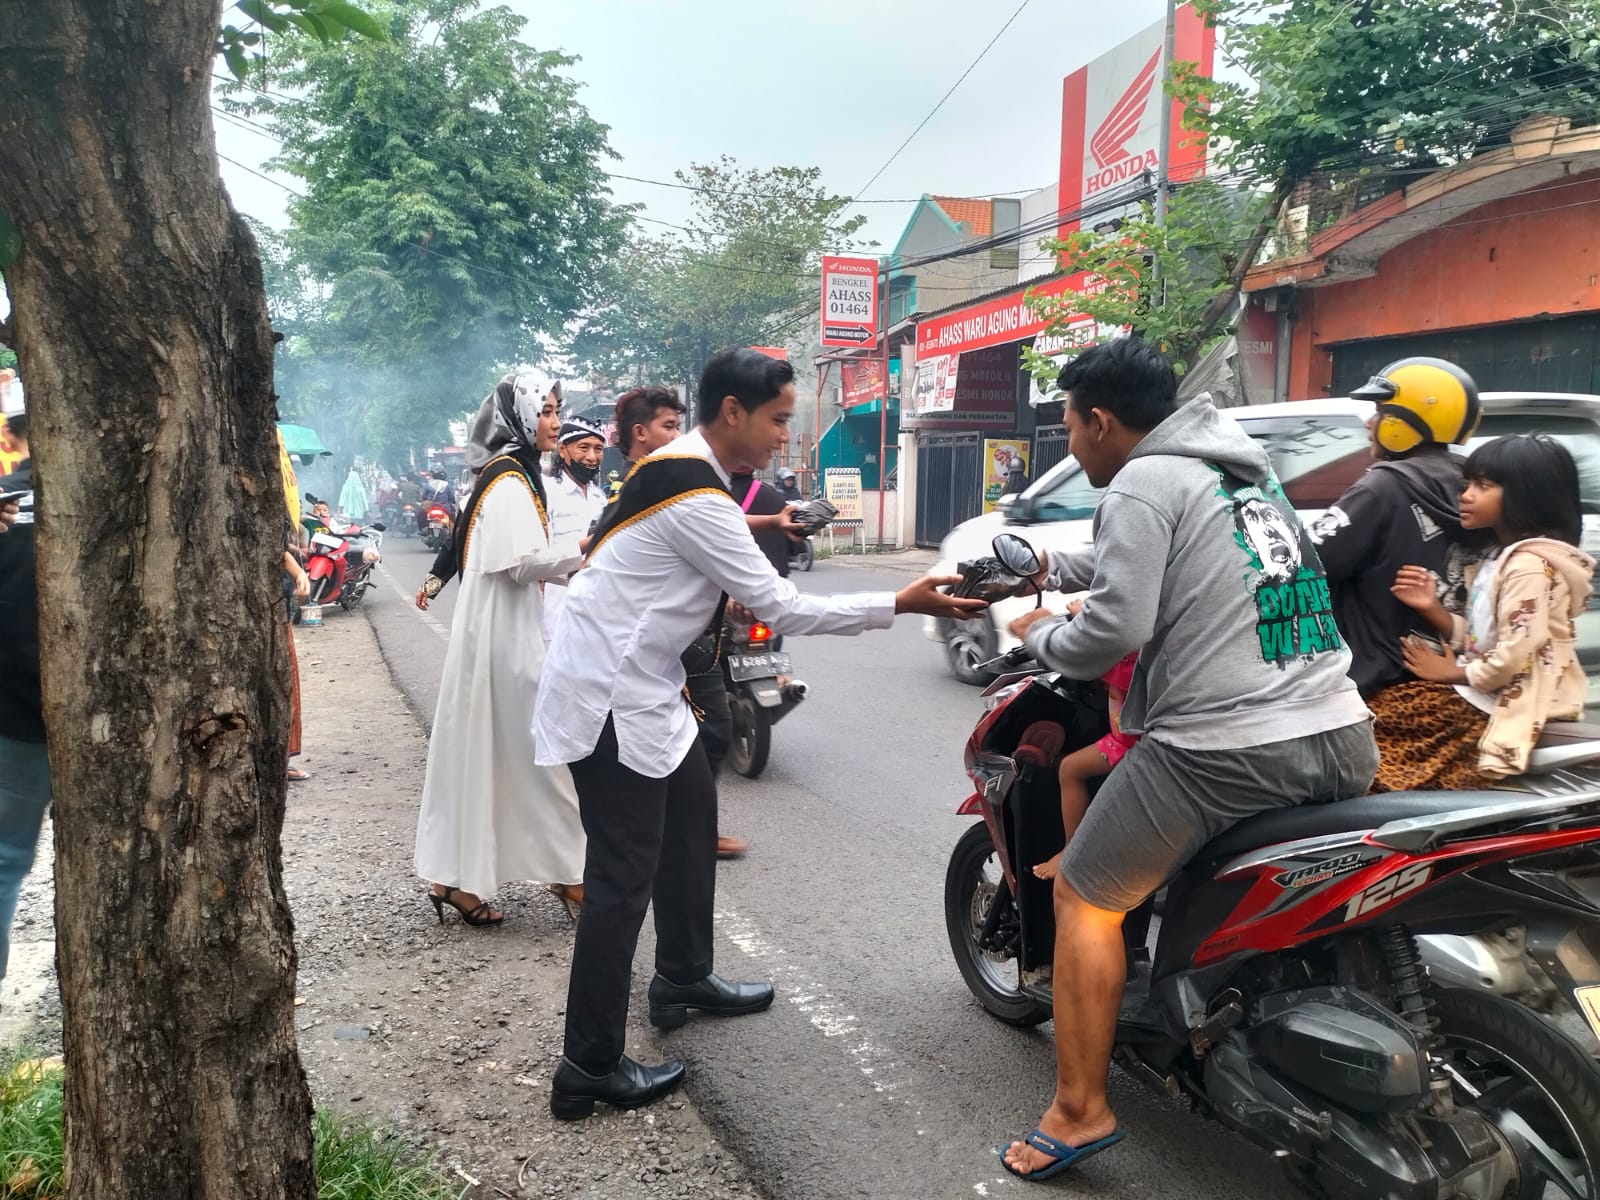 Duta Anti Narkoba Kabupaten Sidoarjo, Berbagi 1000 Takjil di Bulan Ramadhan